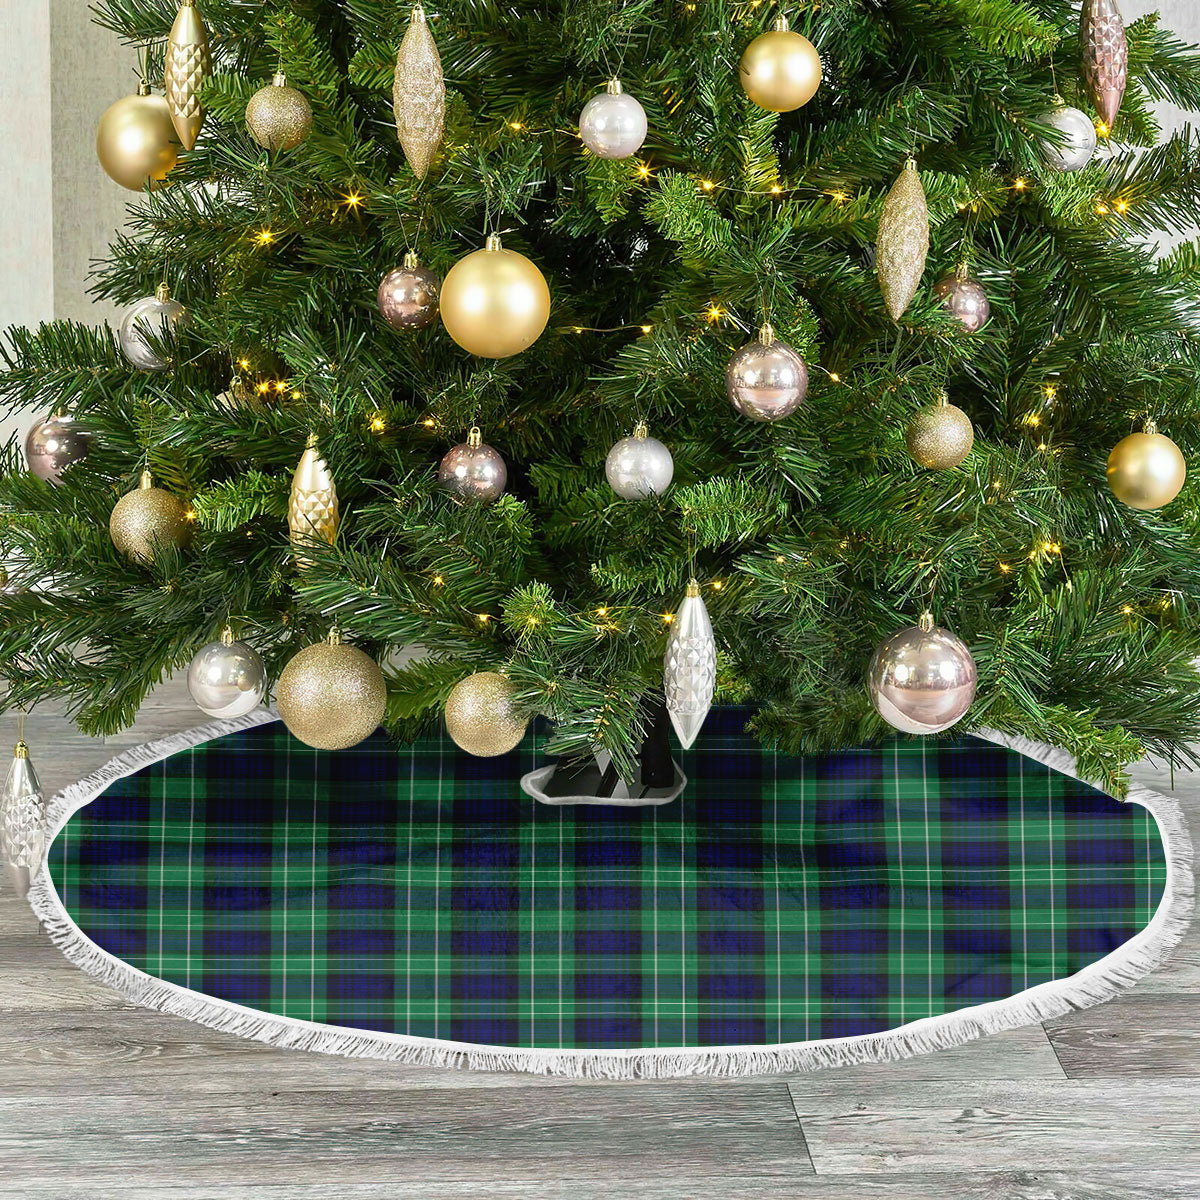 Abercrombie Tartan Christmas Tree Skirt